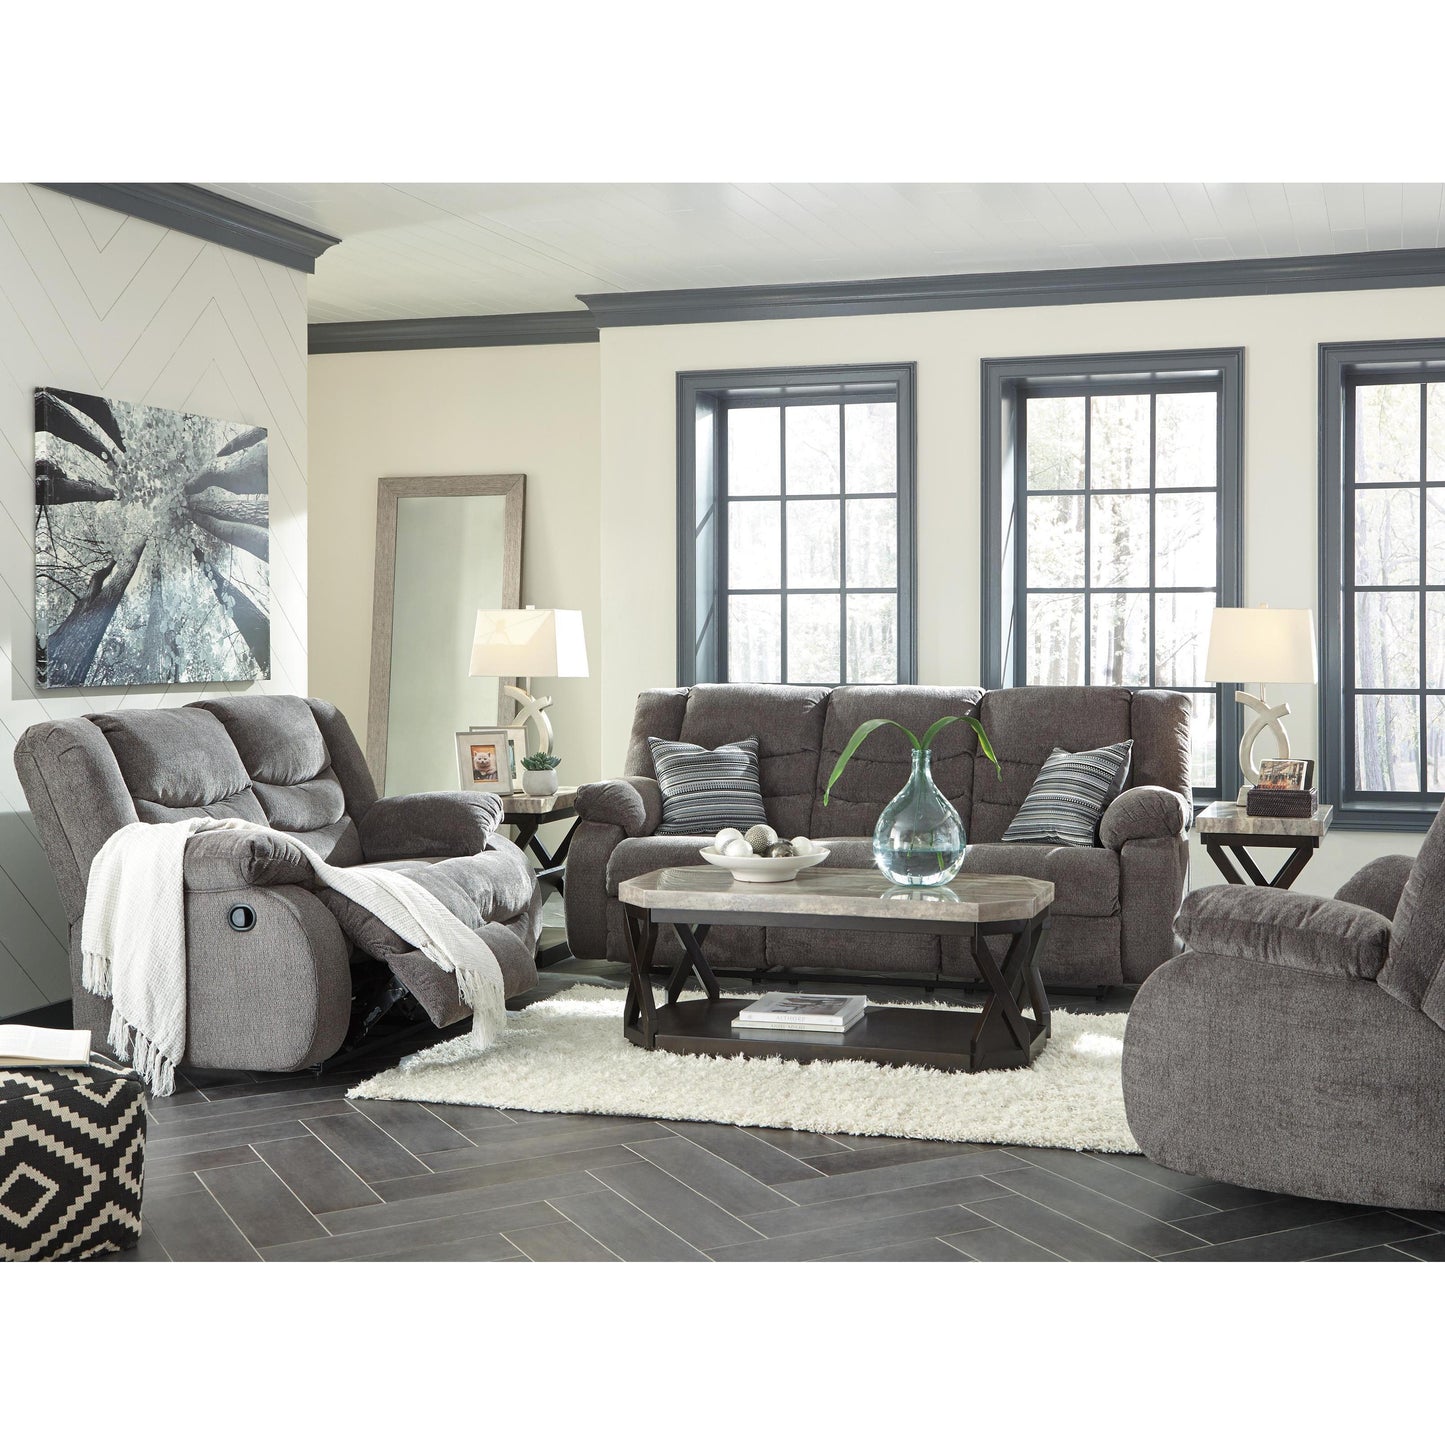 Signature Design by Ashley Tulen 98606 3 pc Reclining Living Room Set IMAGE 1